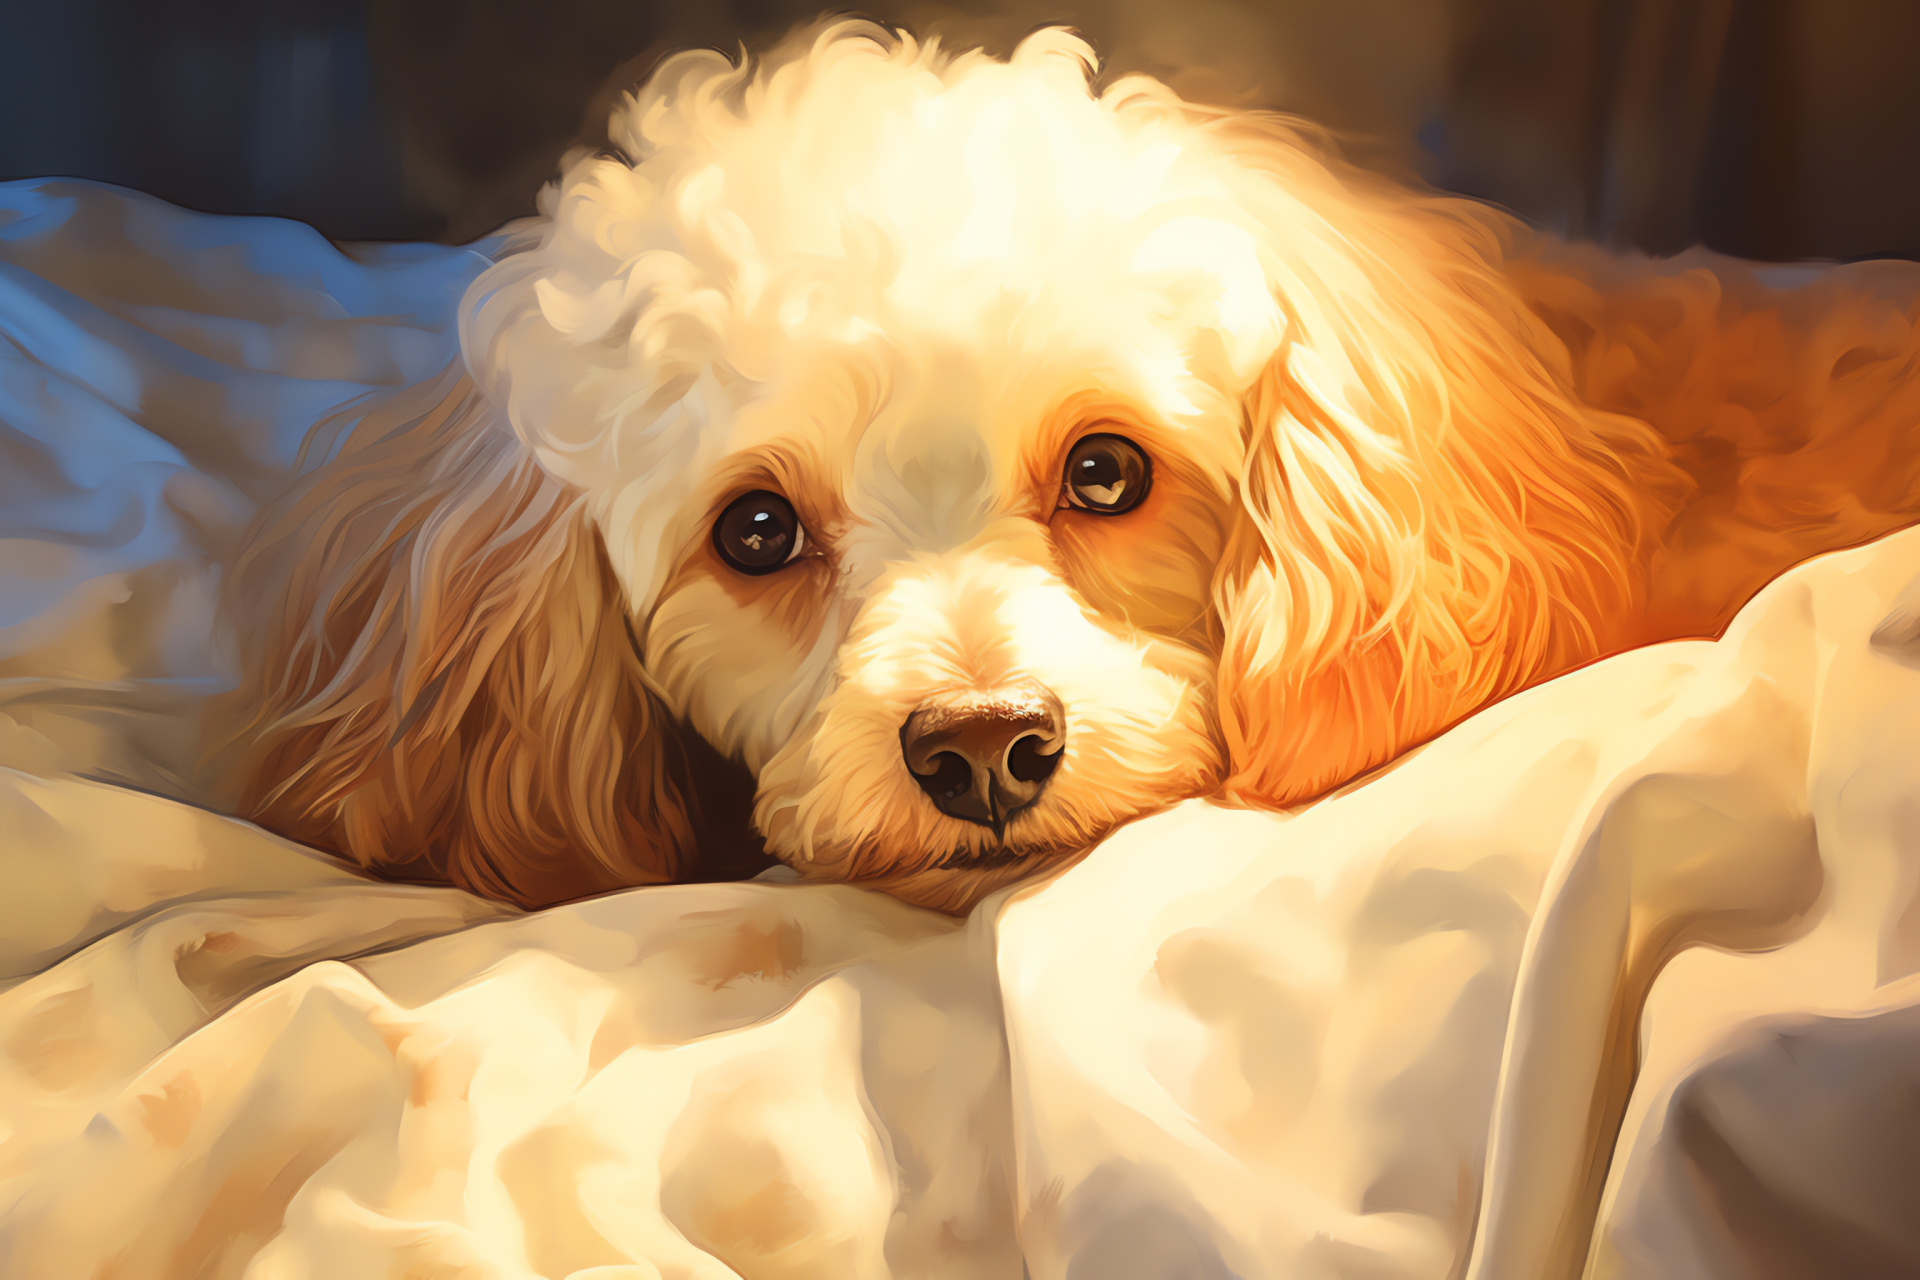 Poodle in residence, Plush Poodle curls, Canine Poodle loyalty, Domestic Poodle setting, Comfort Poodle, HD Desktop Image